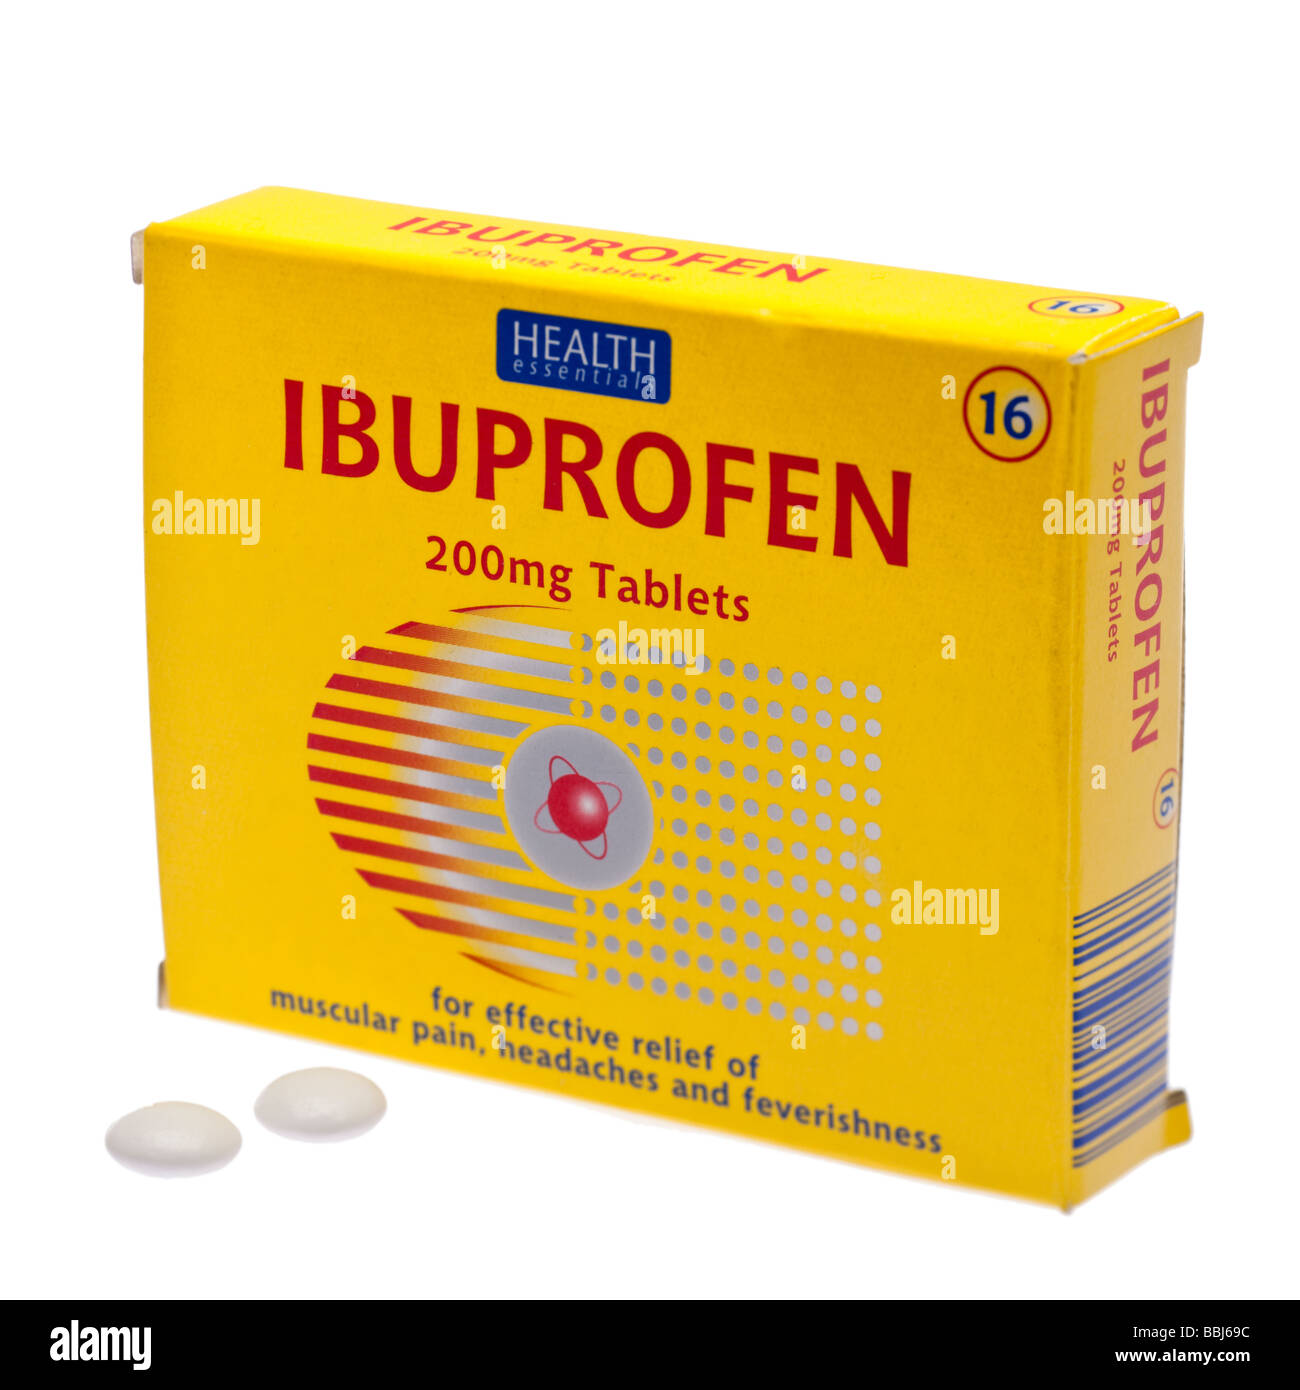 Ibuprofen-Paket und Tabletten Stockfoto